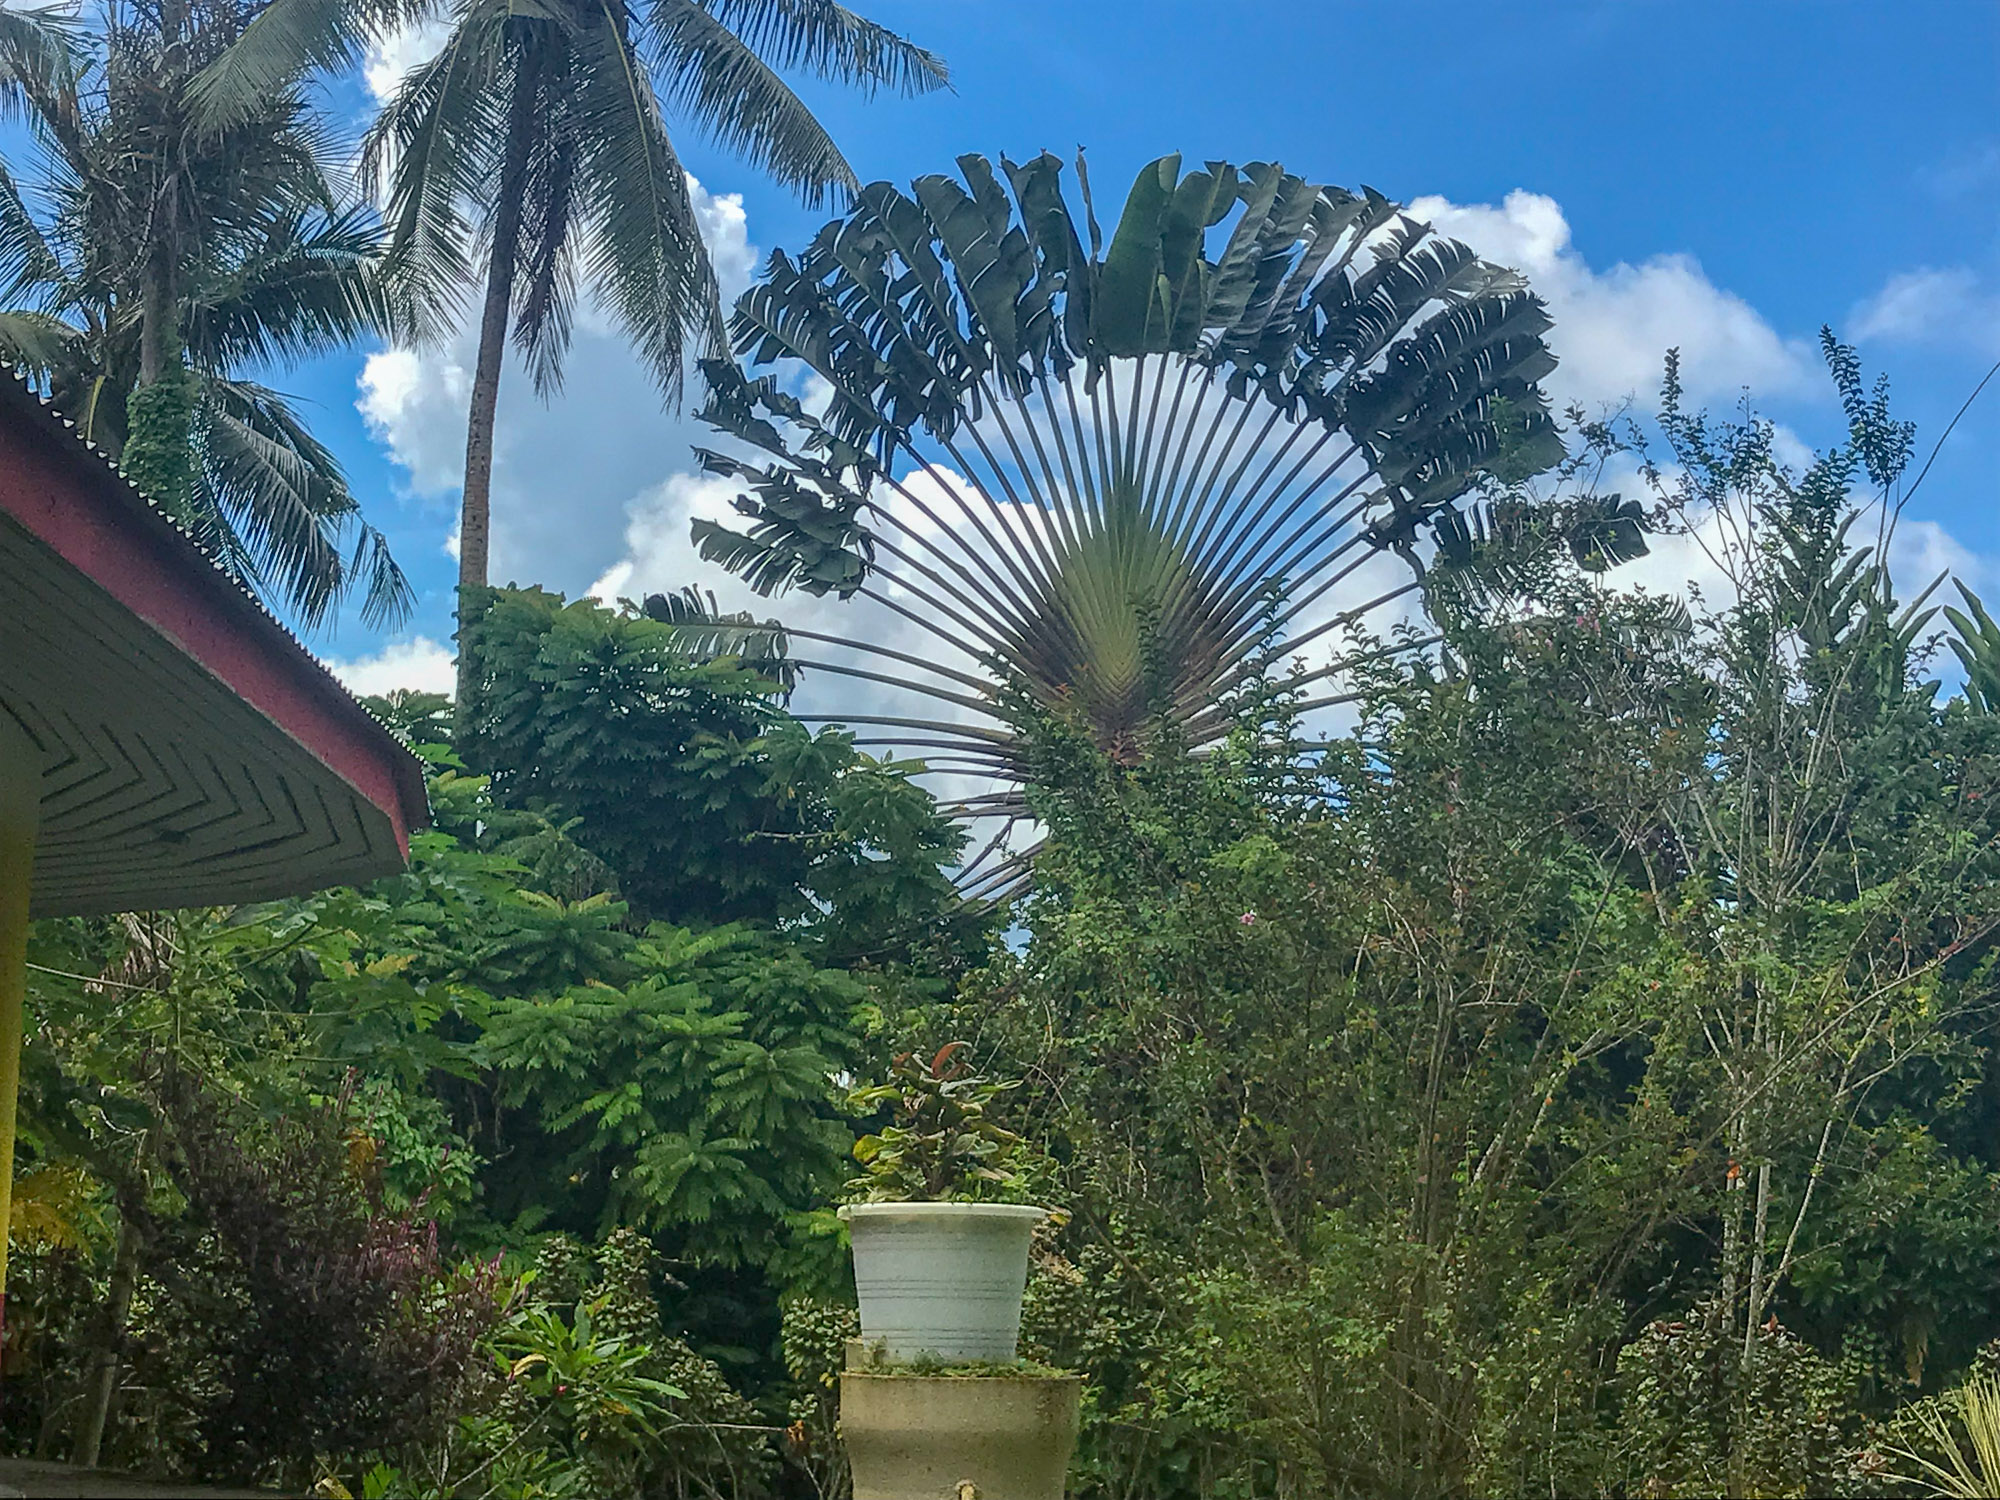 Peacock-shaped palm